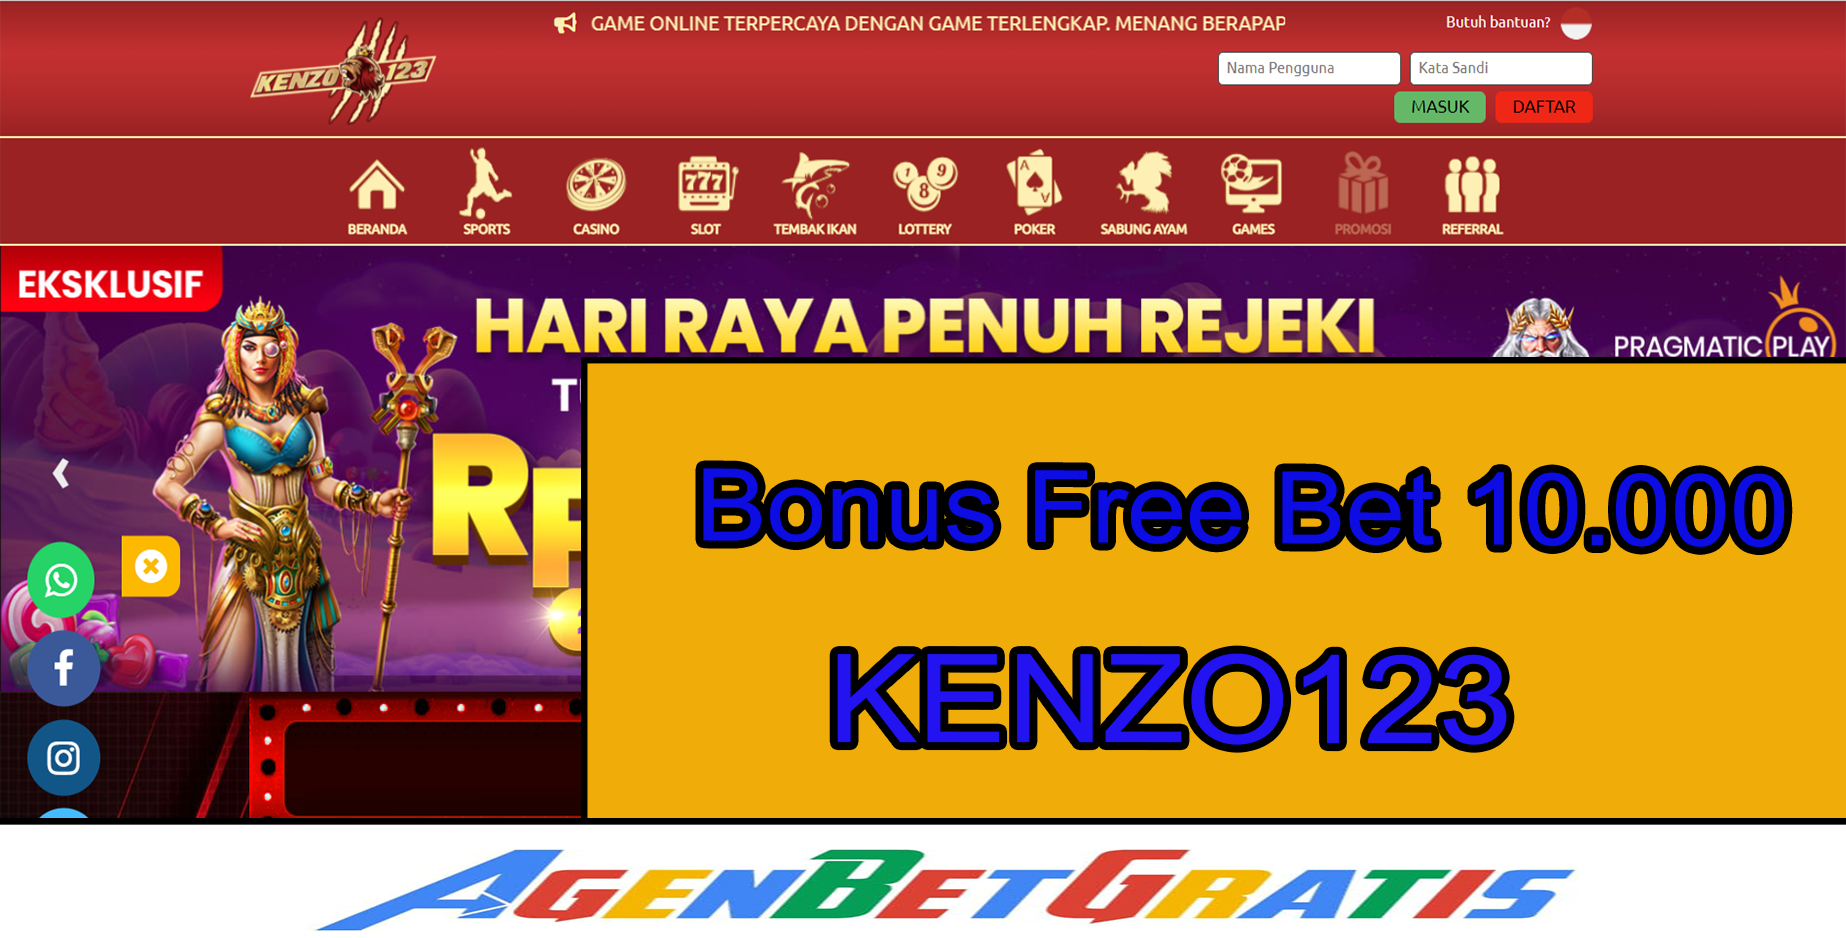 KENZO123 - Bonus FreeBet 10.000